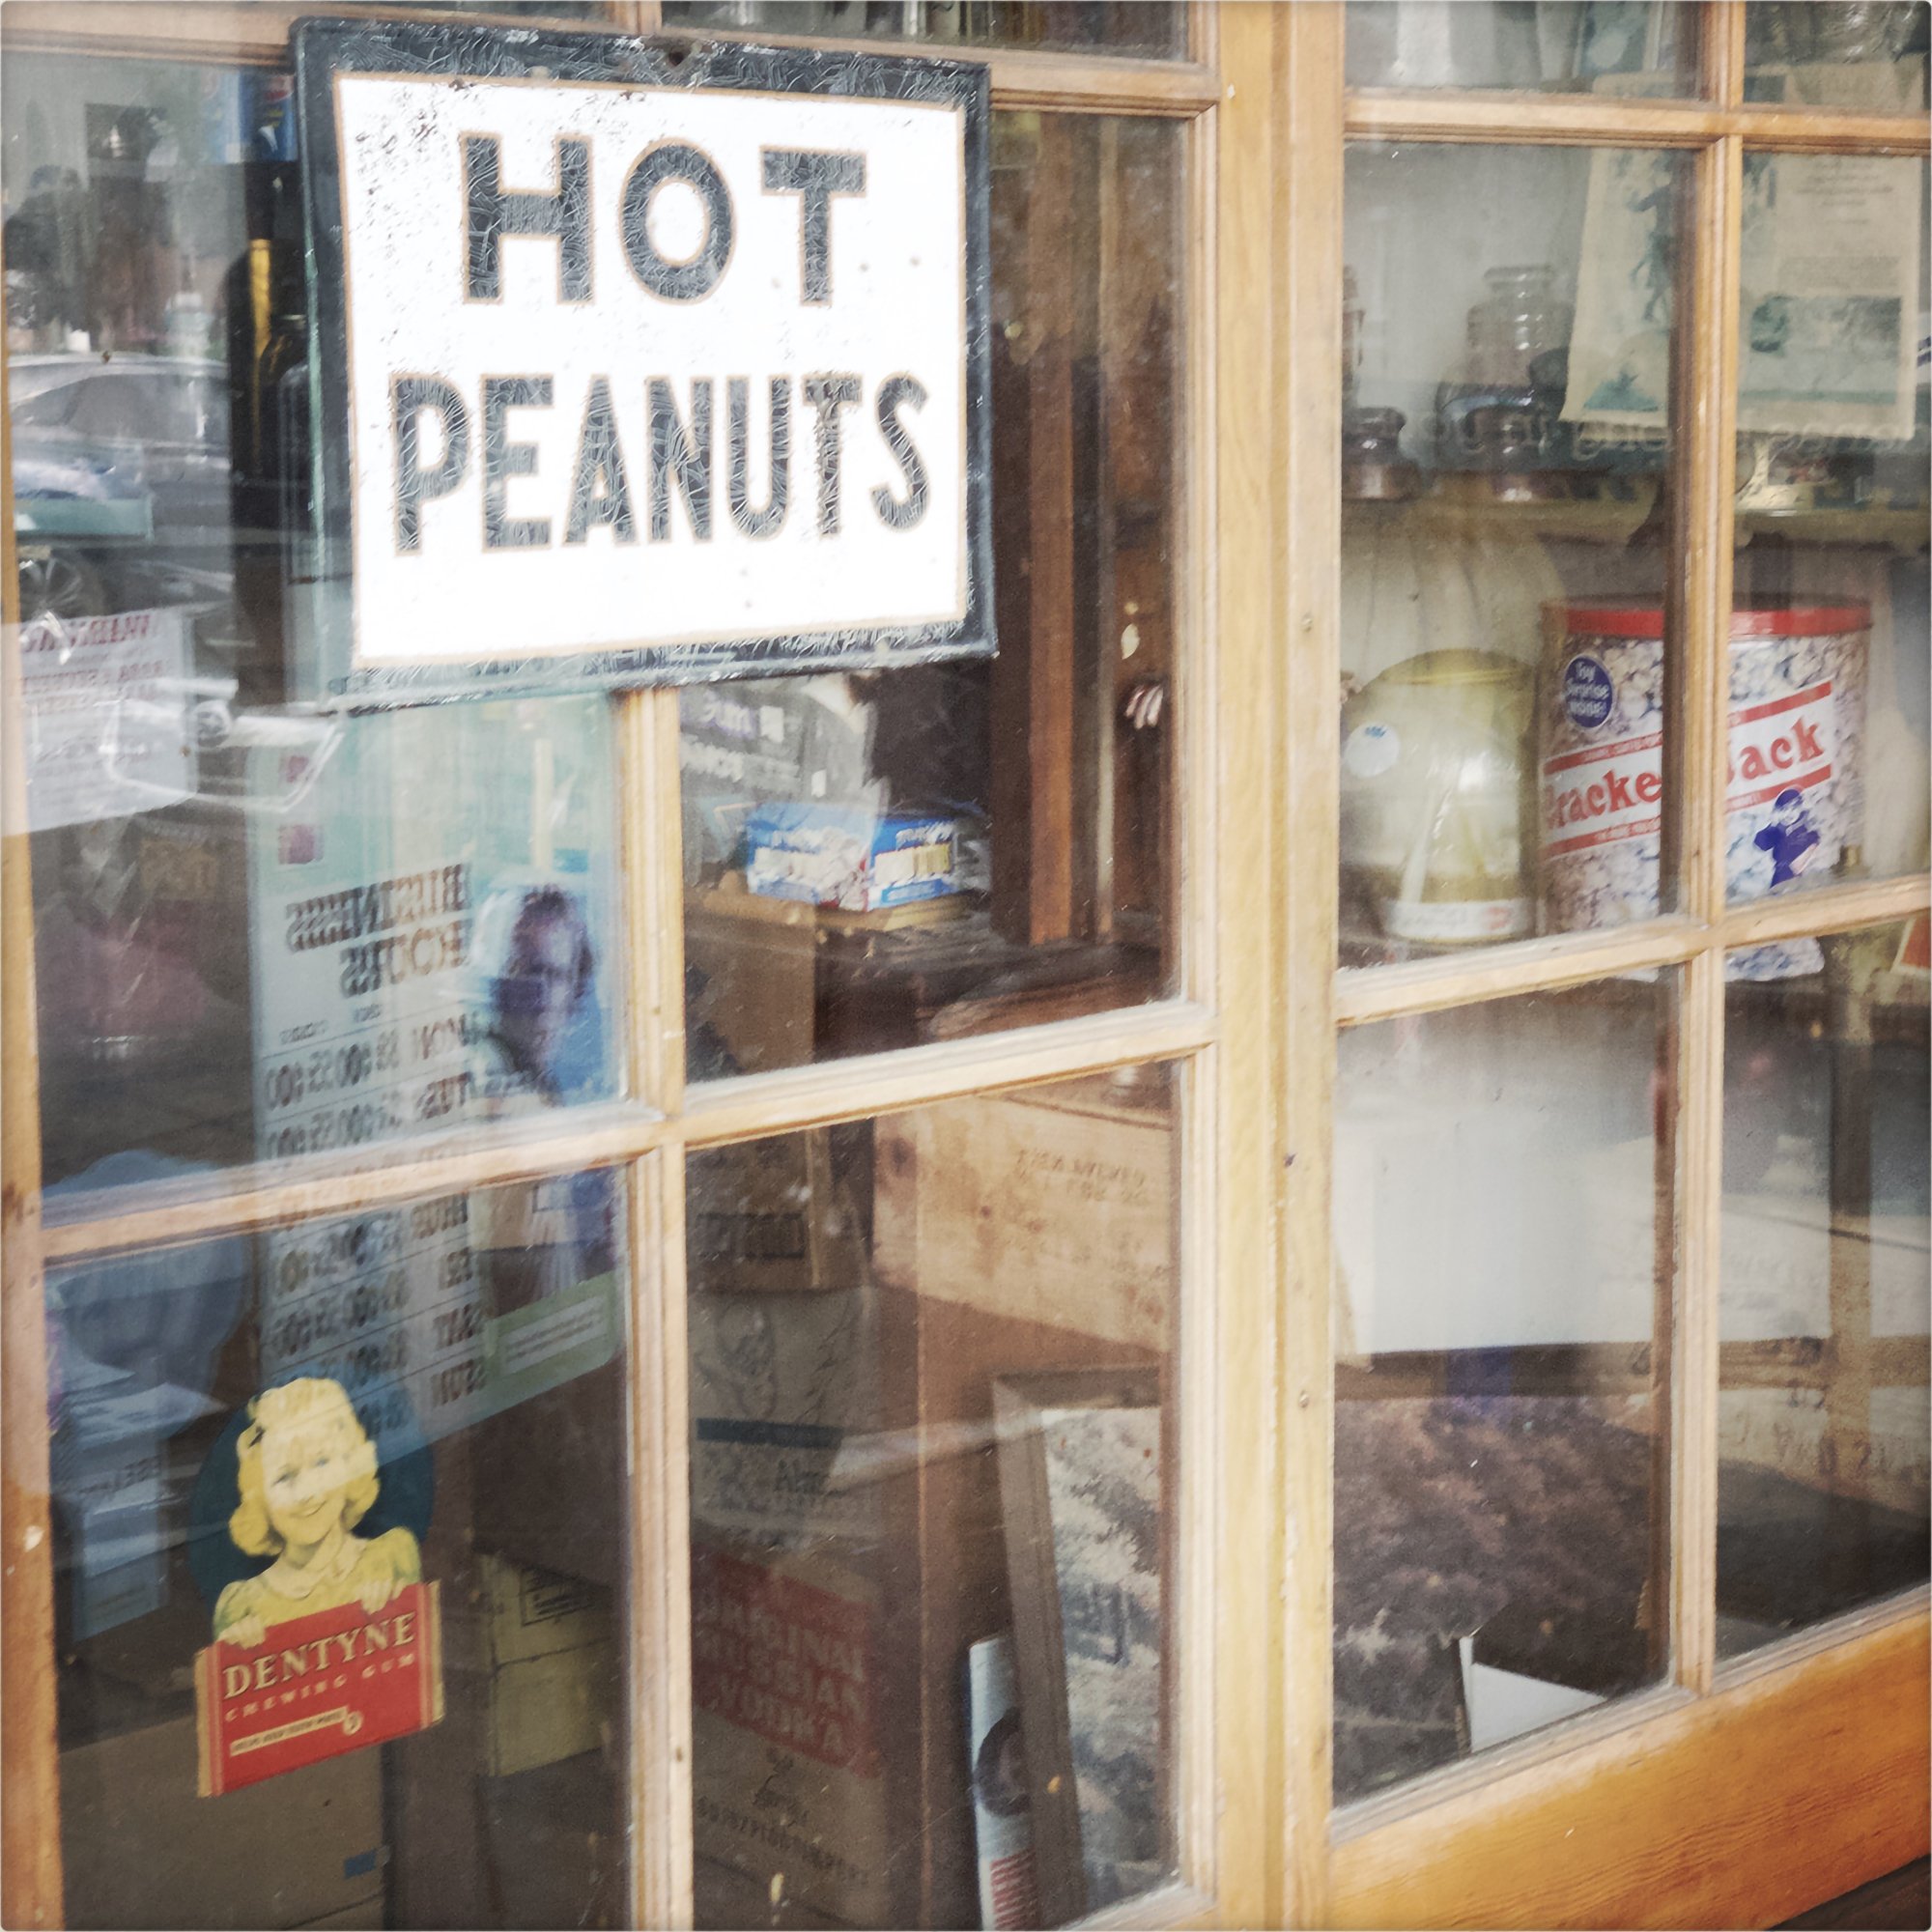    Hot Peanuts    by Ruth Raskin 